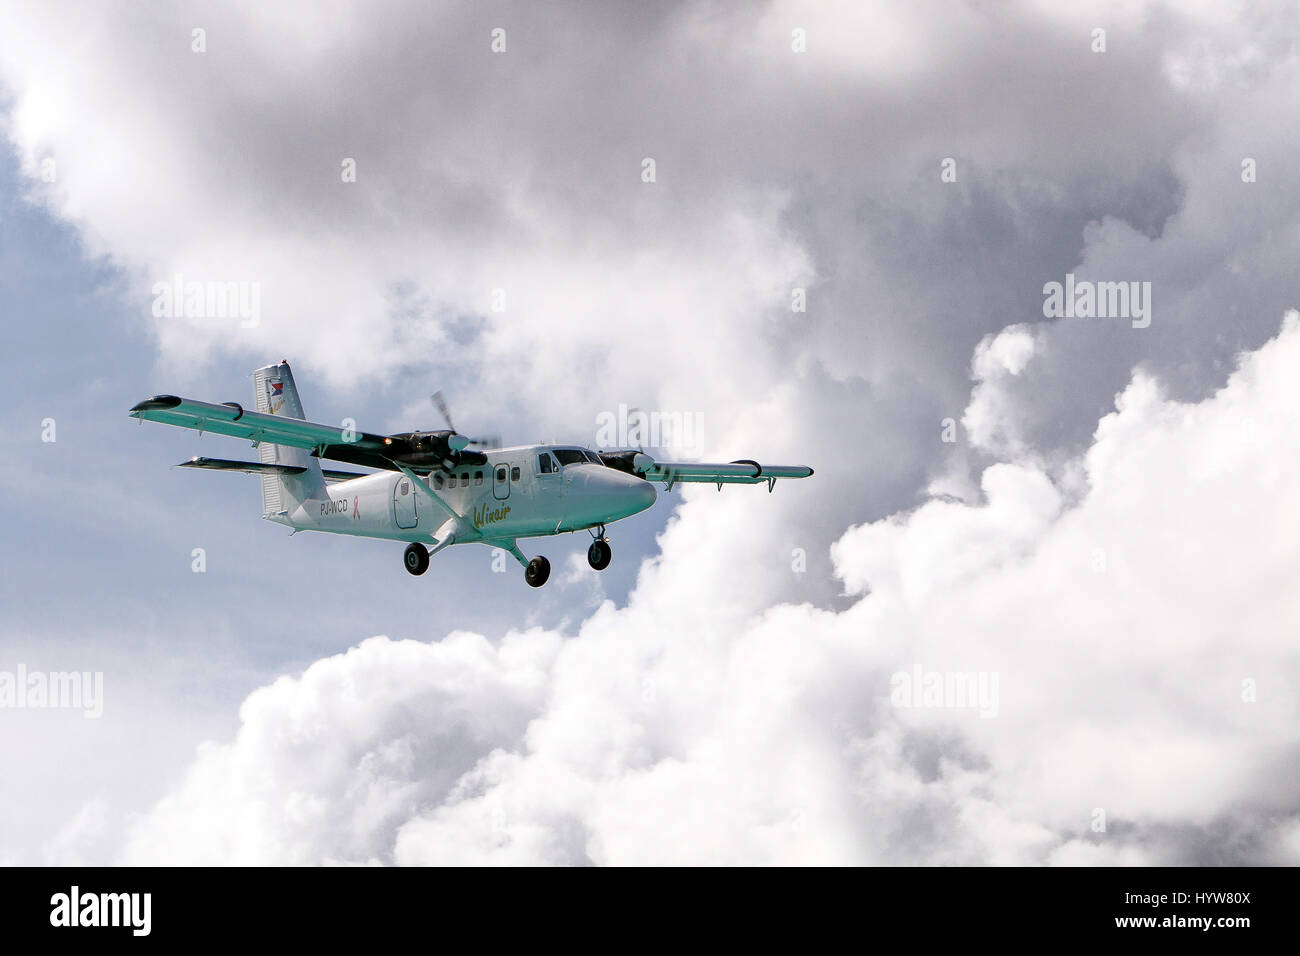 A Winair small plane prepares for landing at Princess Juliana airport. Stock Photo